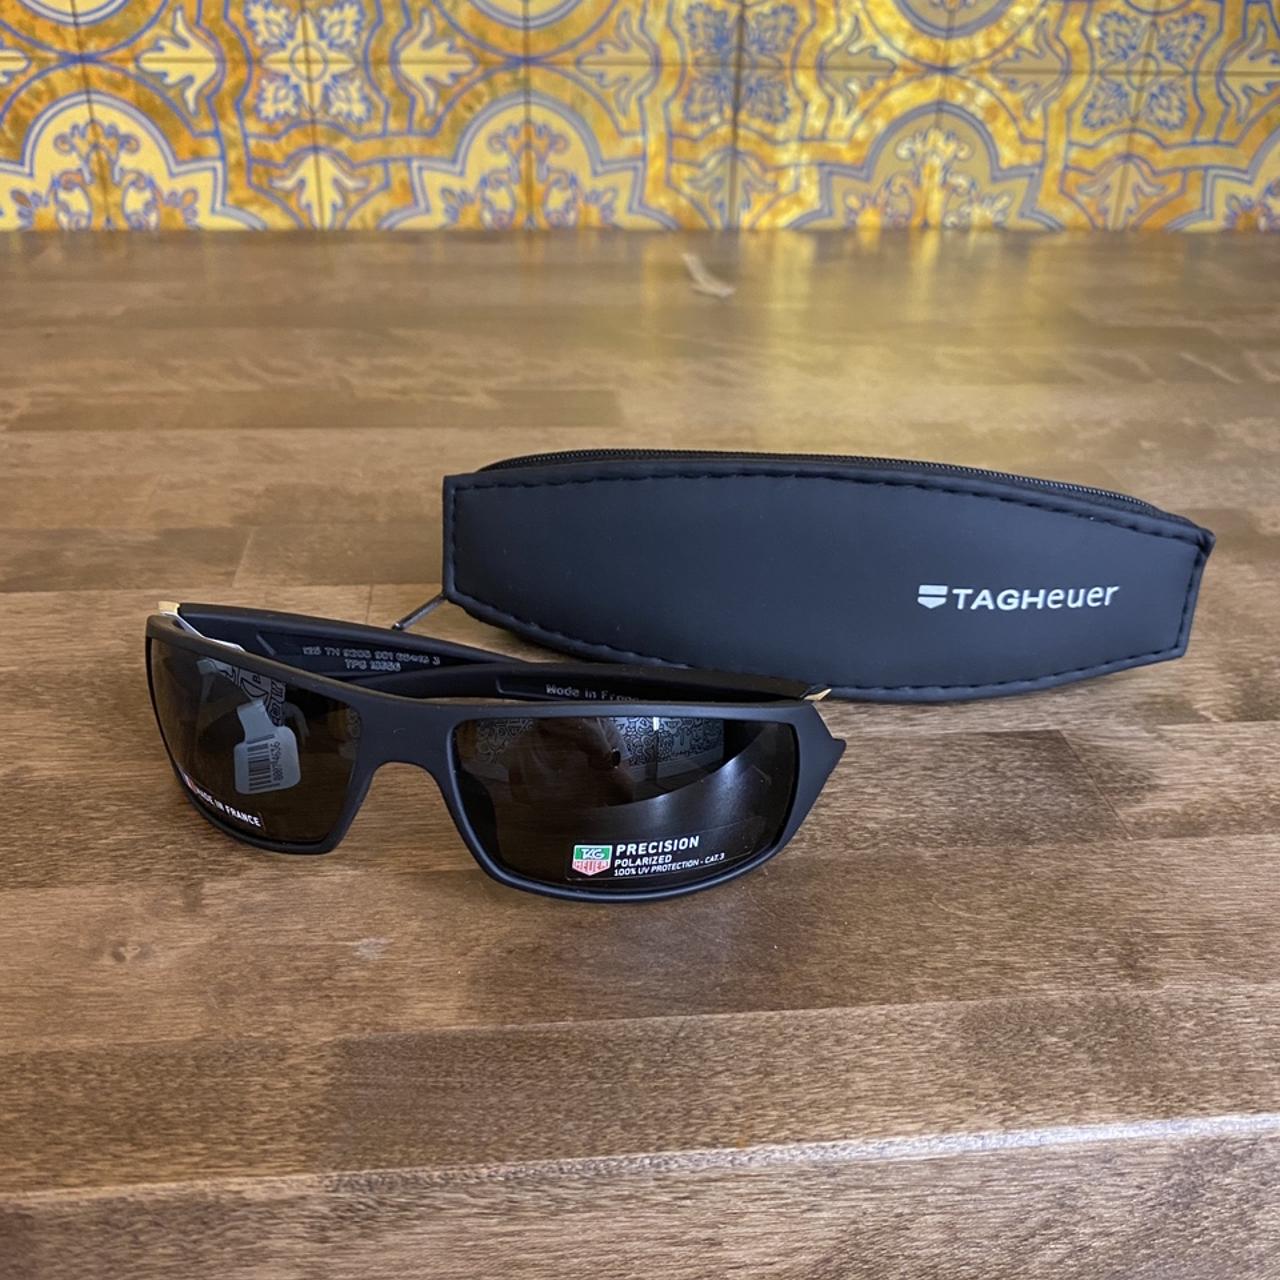 Product Image 1 - Tag heuer racing sunglasses. Brand